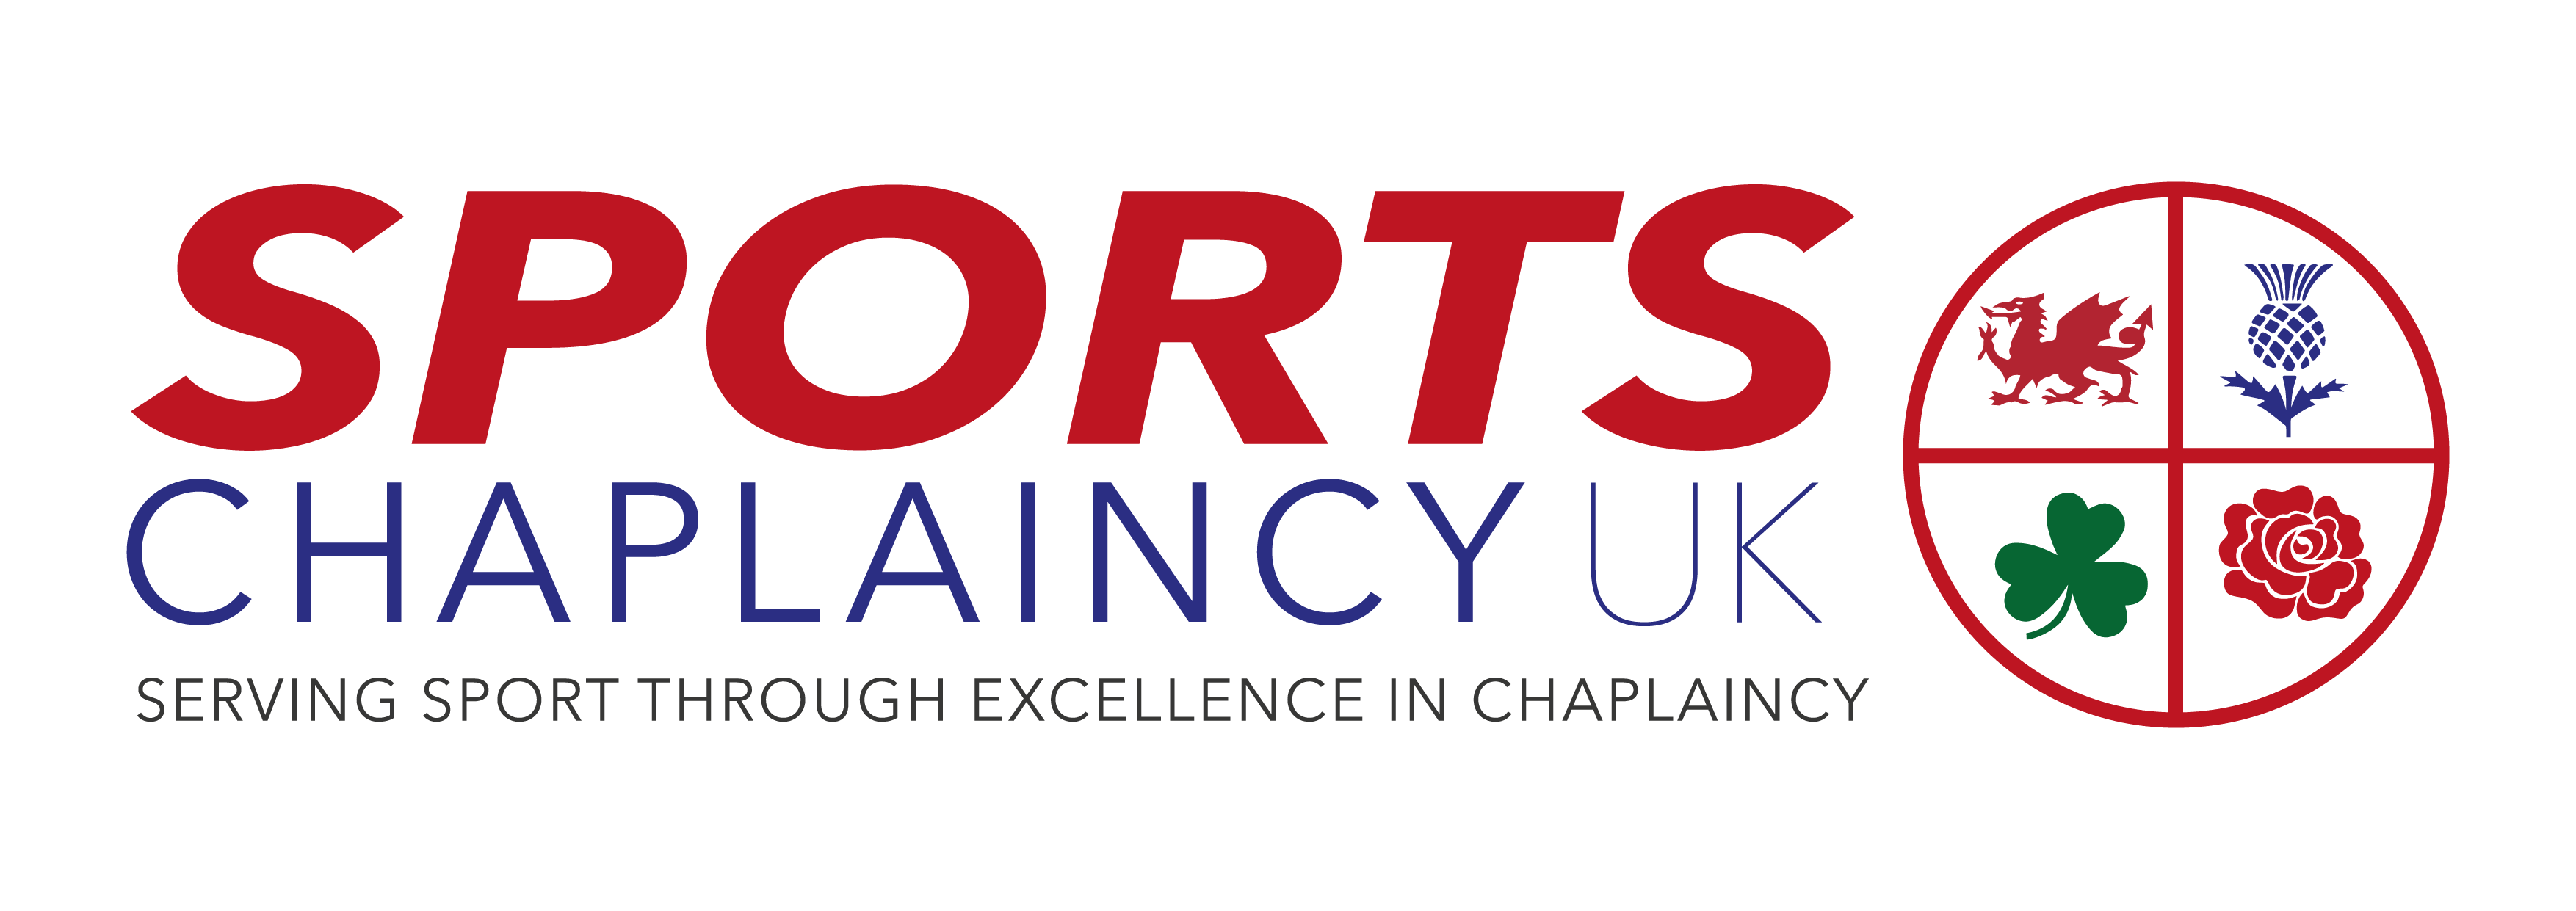 Sports Chaplaincy UK